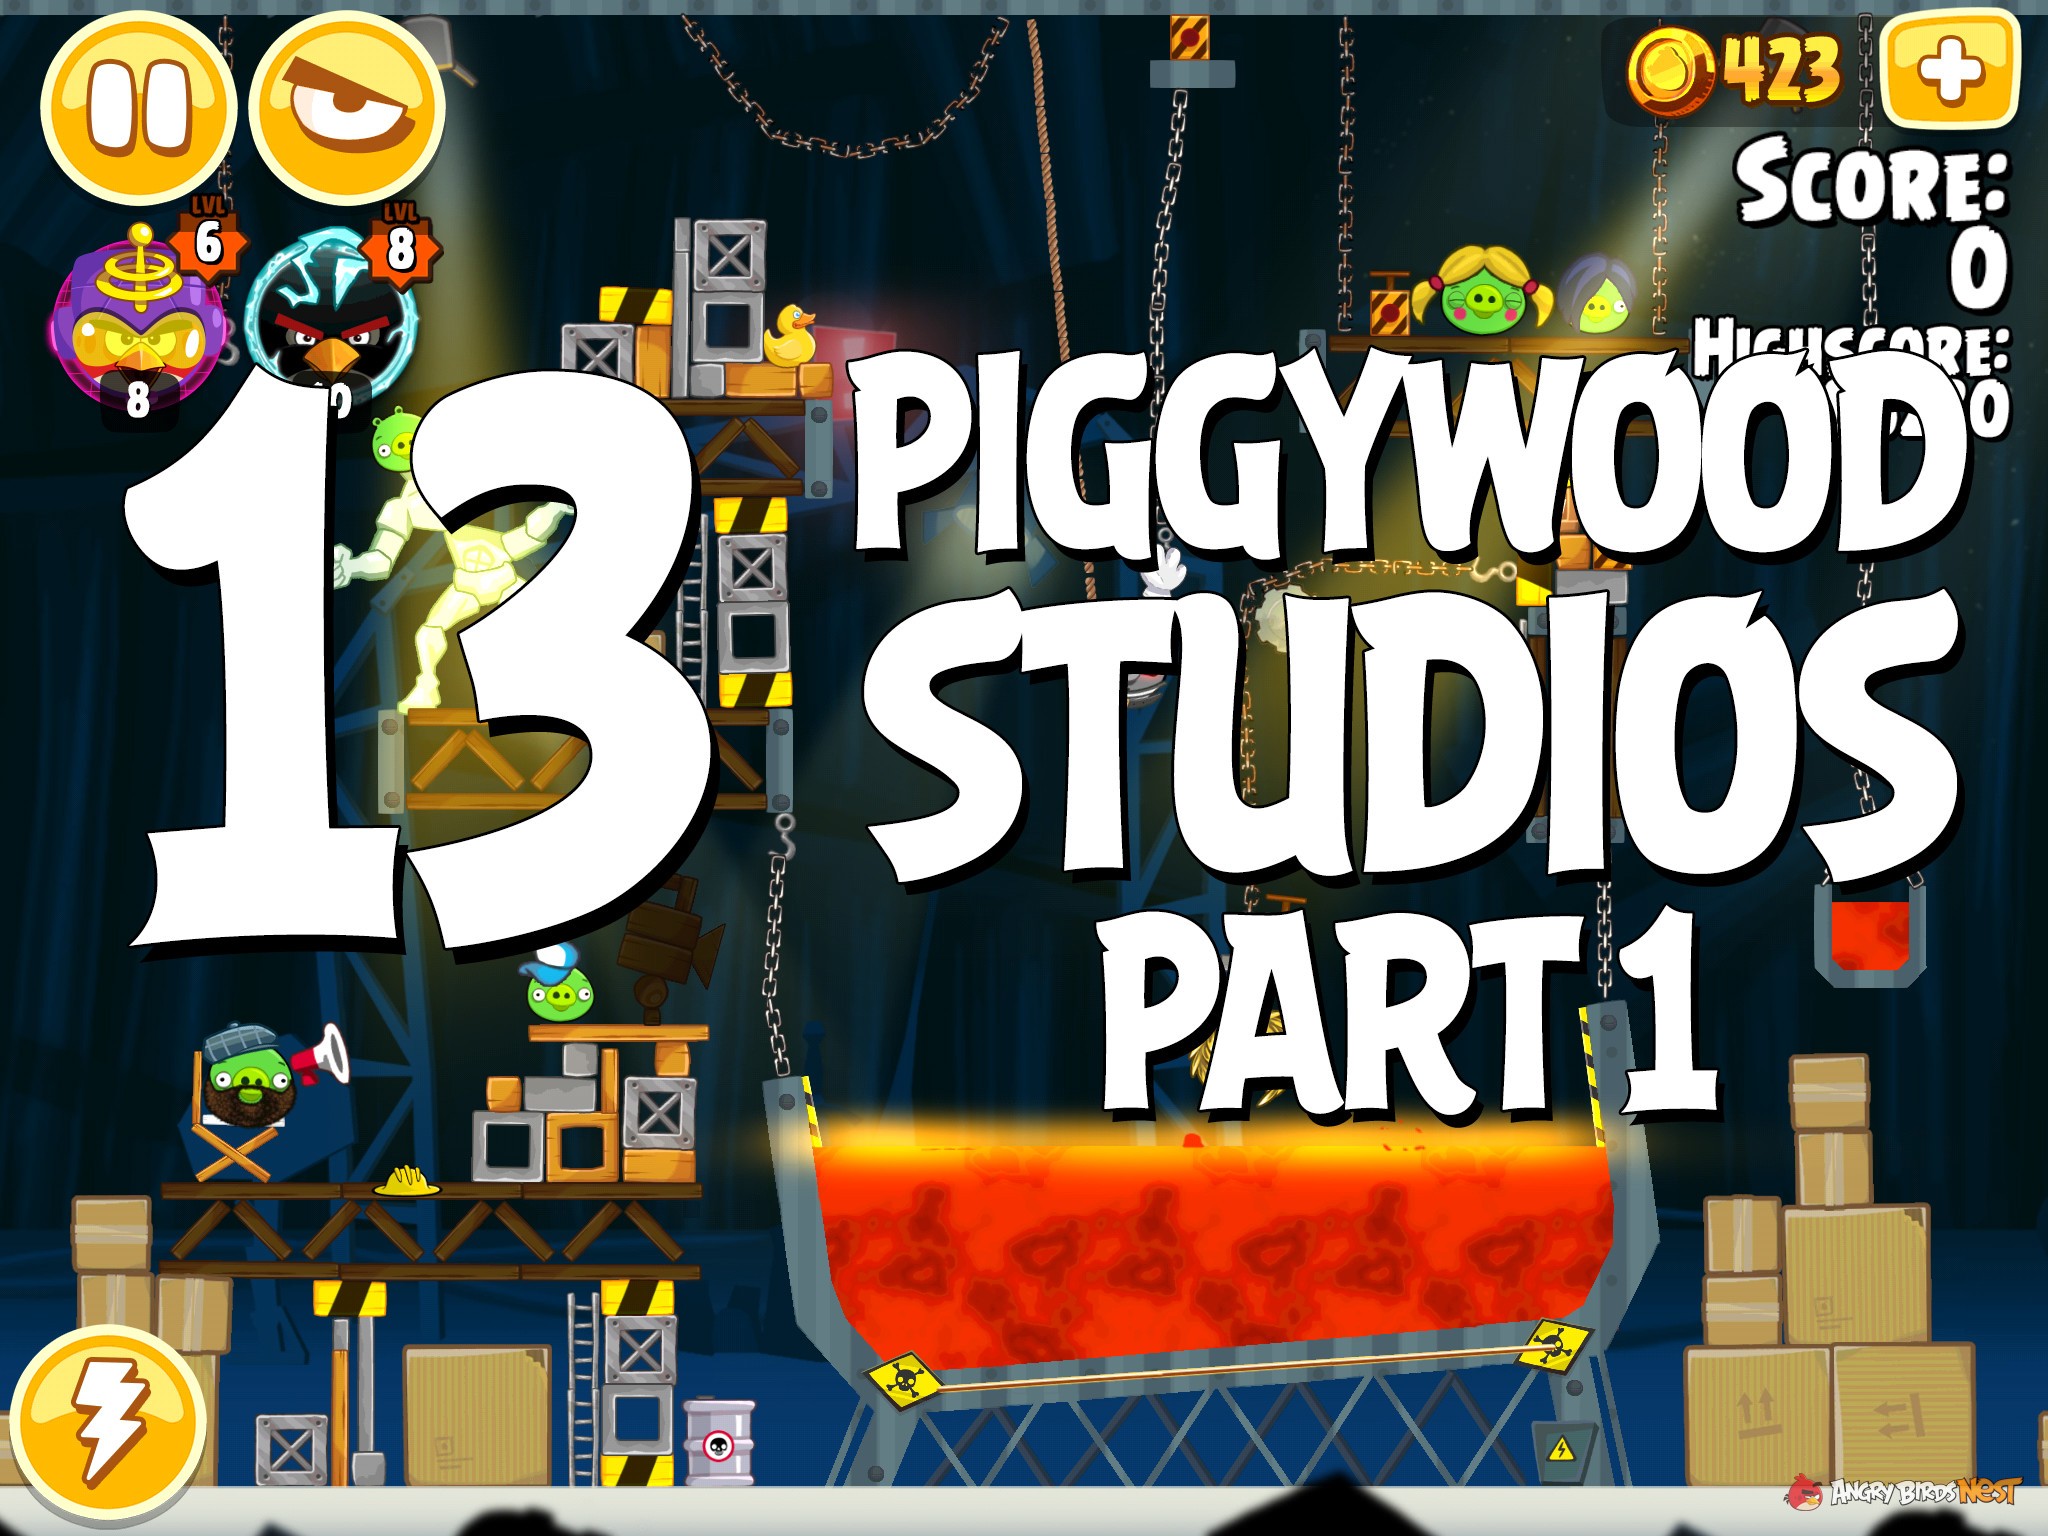 Angry Birds Seasons Piggywood Studios Part 1 Level 13